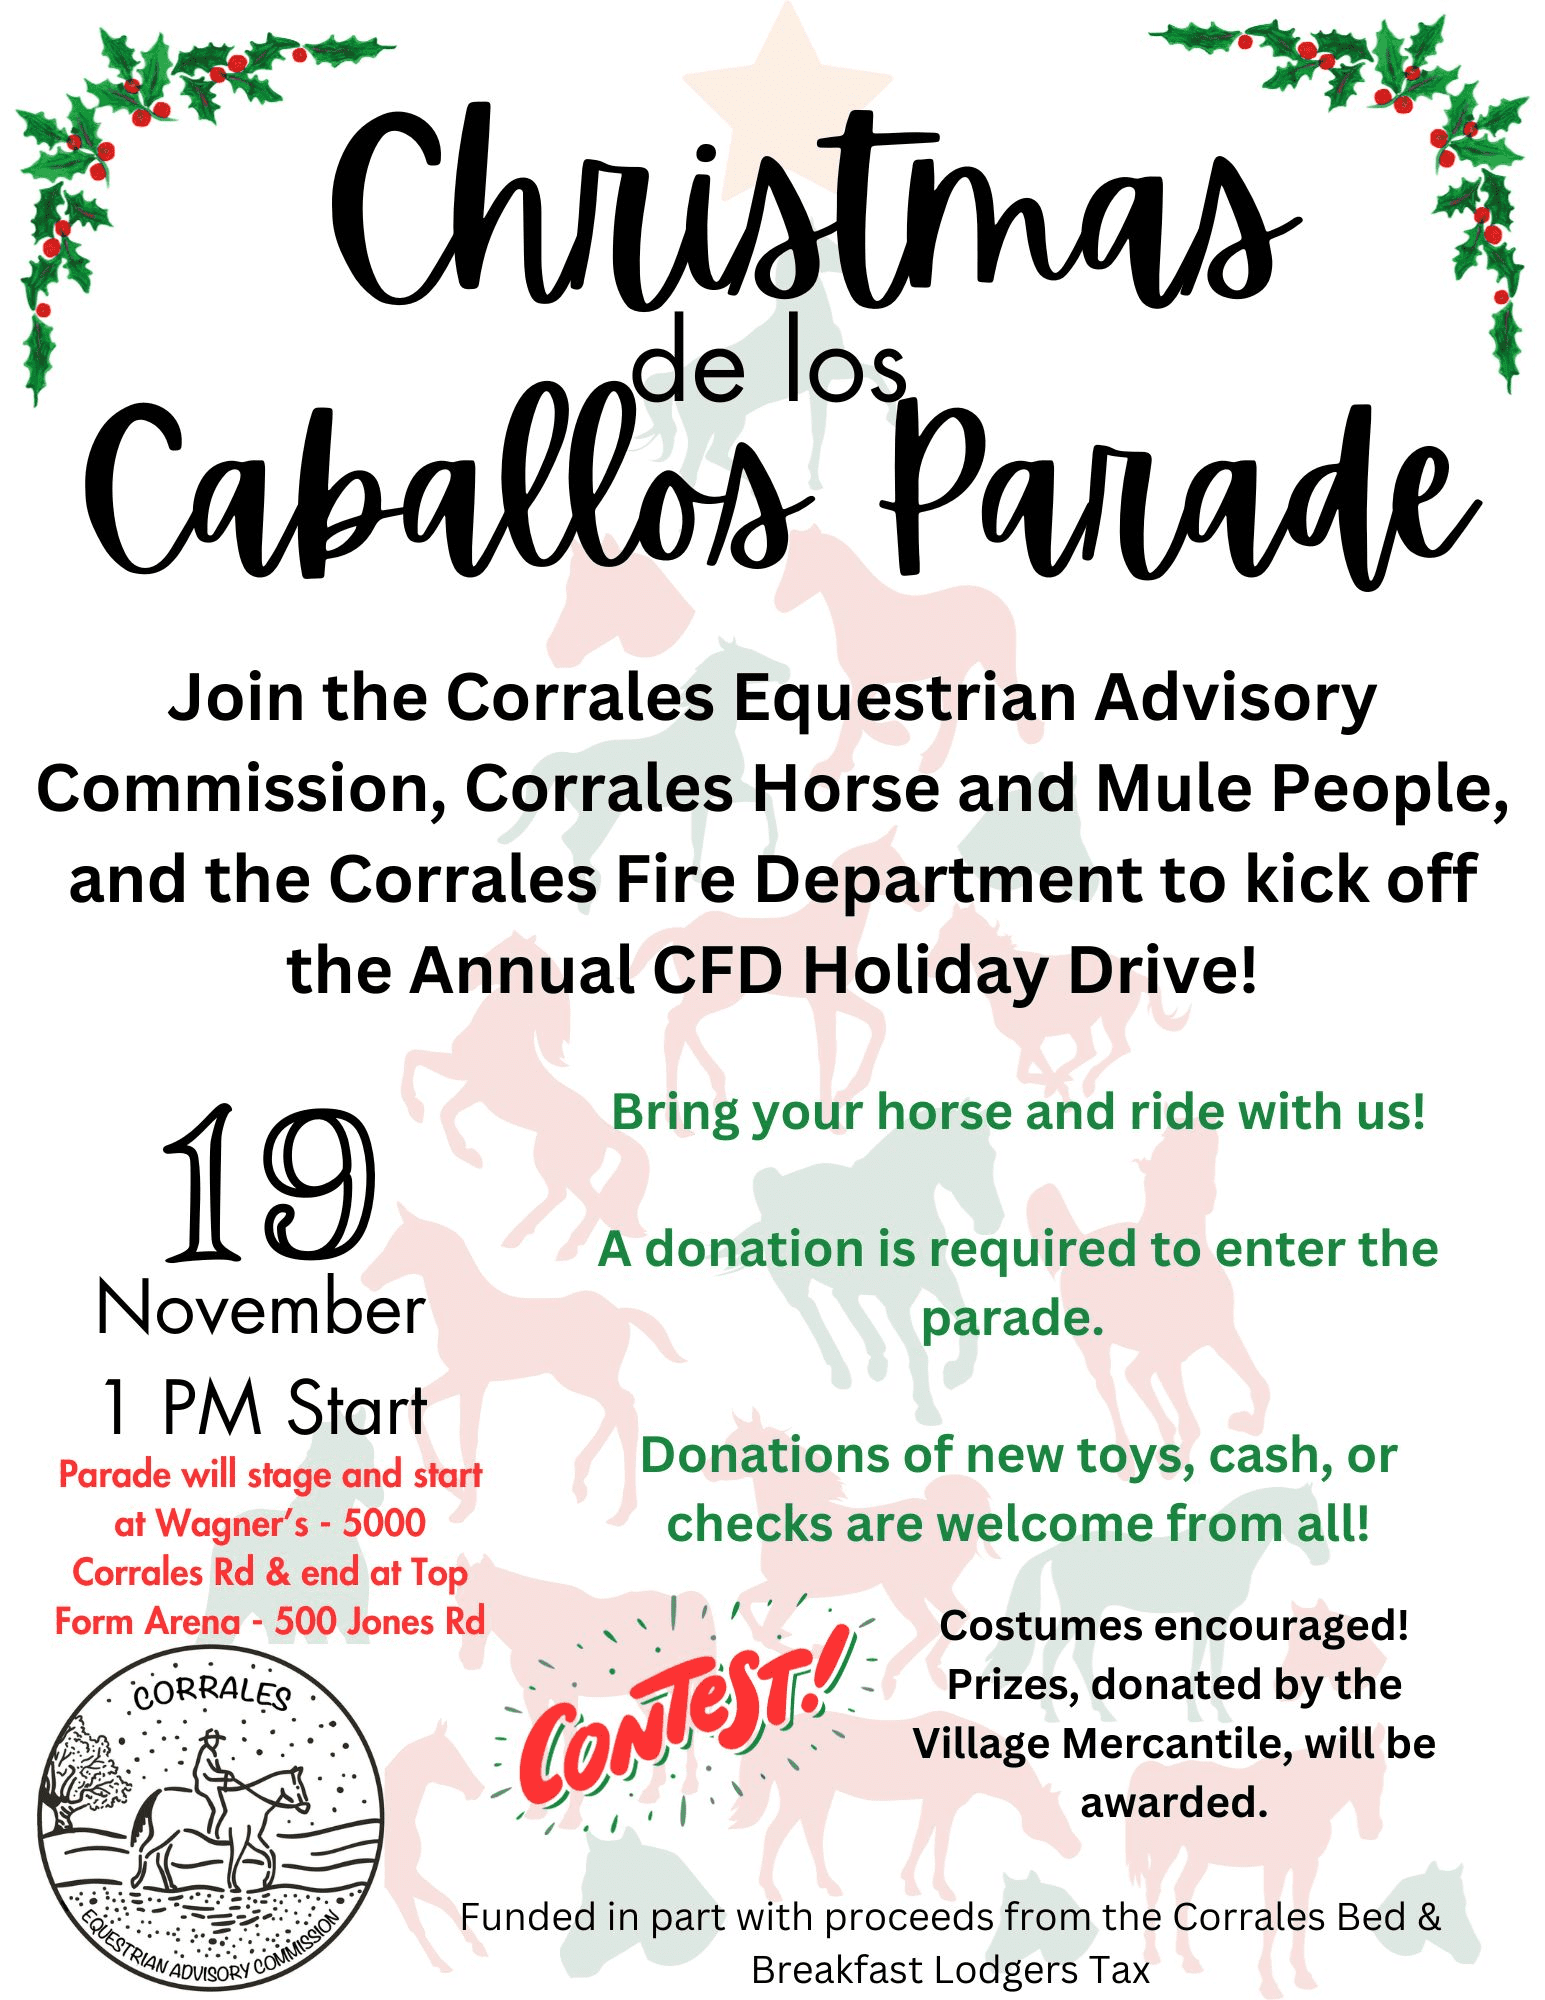 Christmas de los Caballos Parade to kick off Corrales FD holiday drive ...